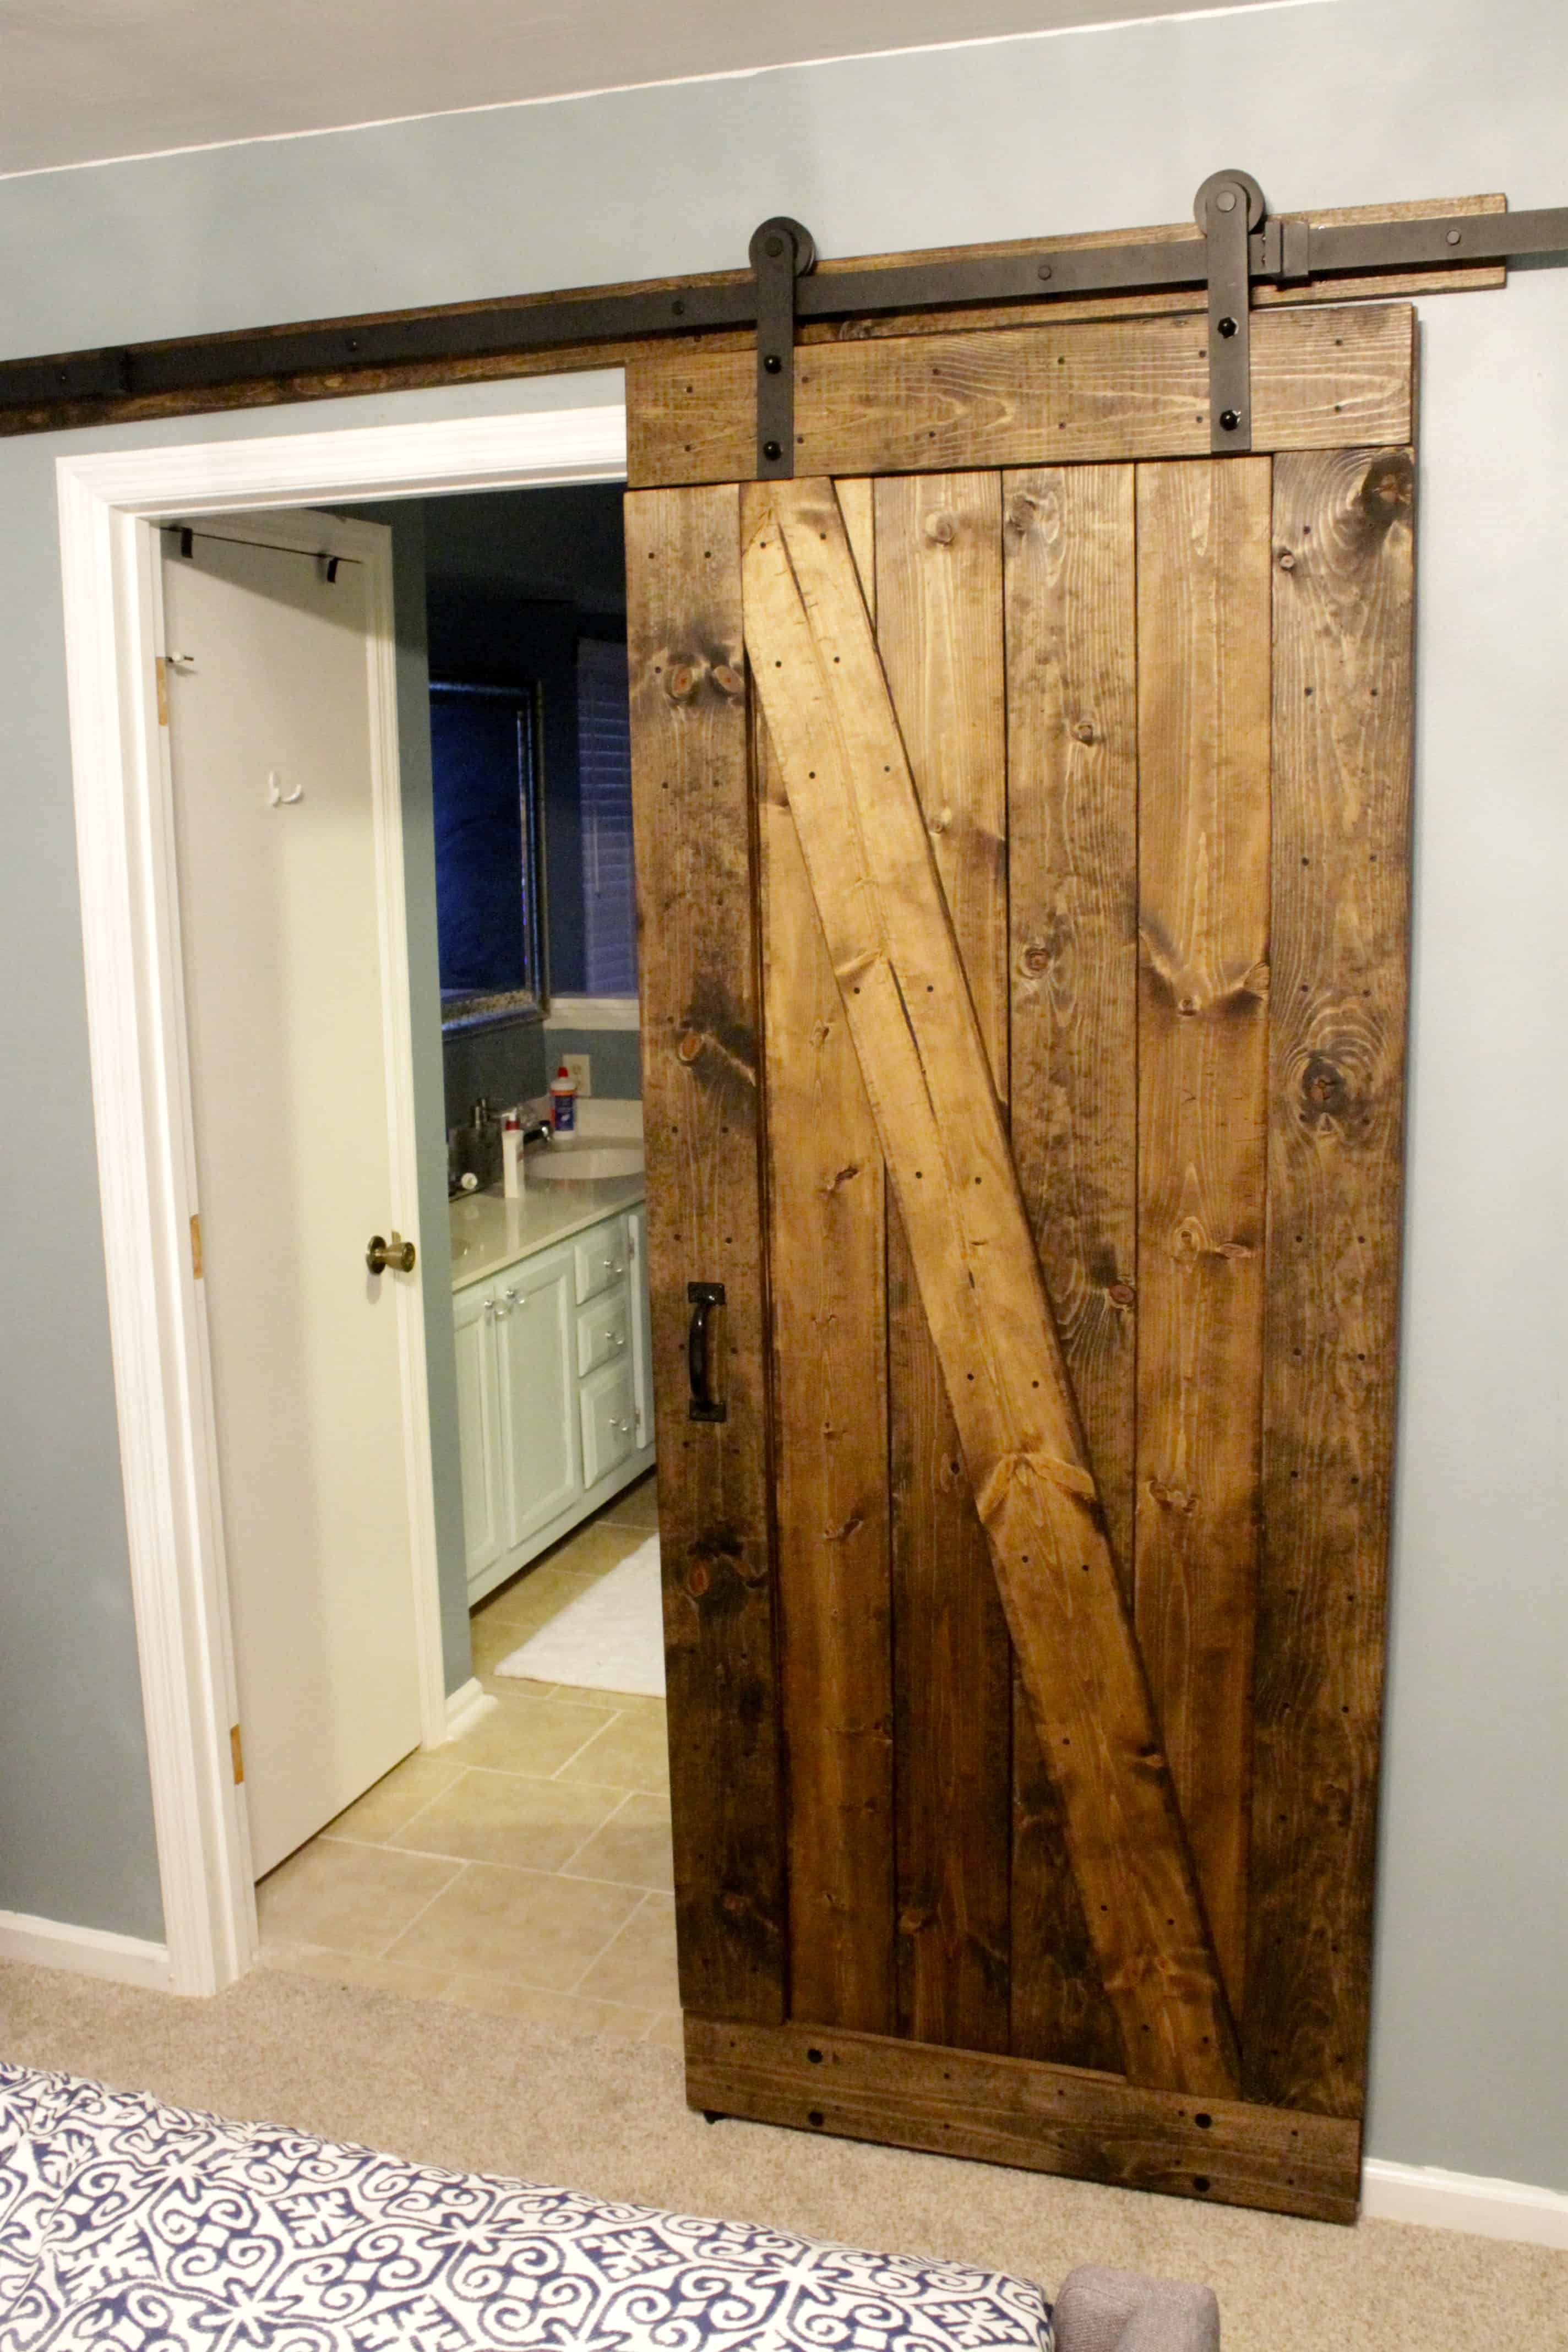 Can I use a barn door for a bathroom?